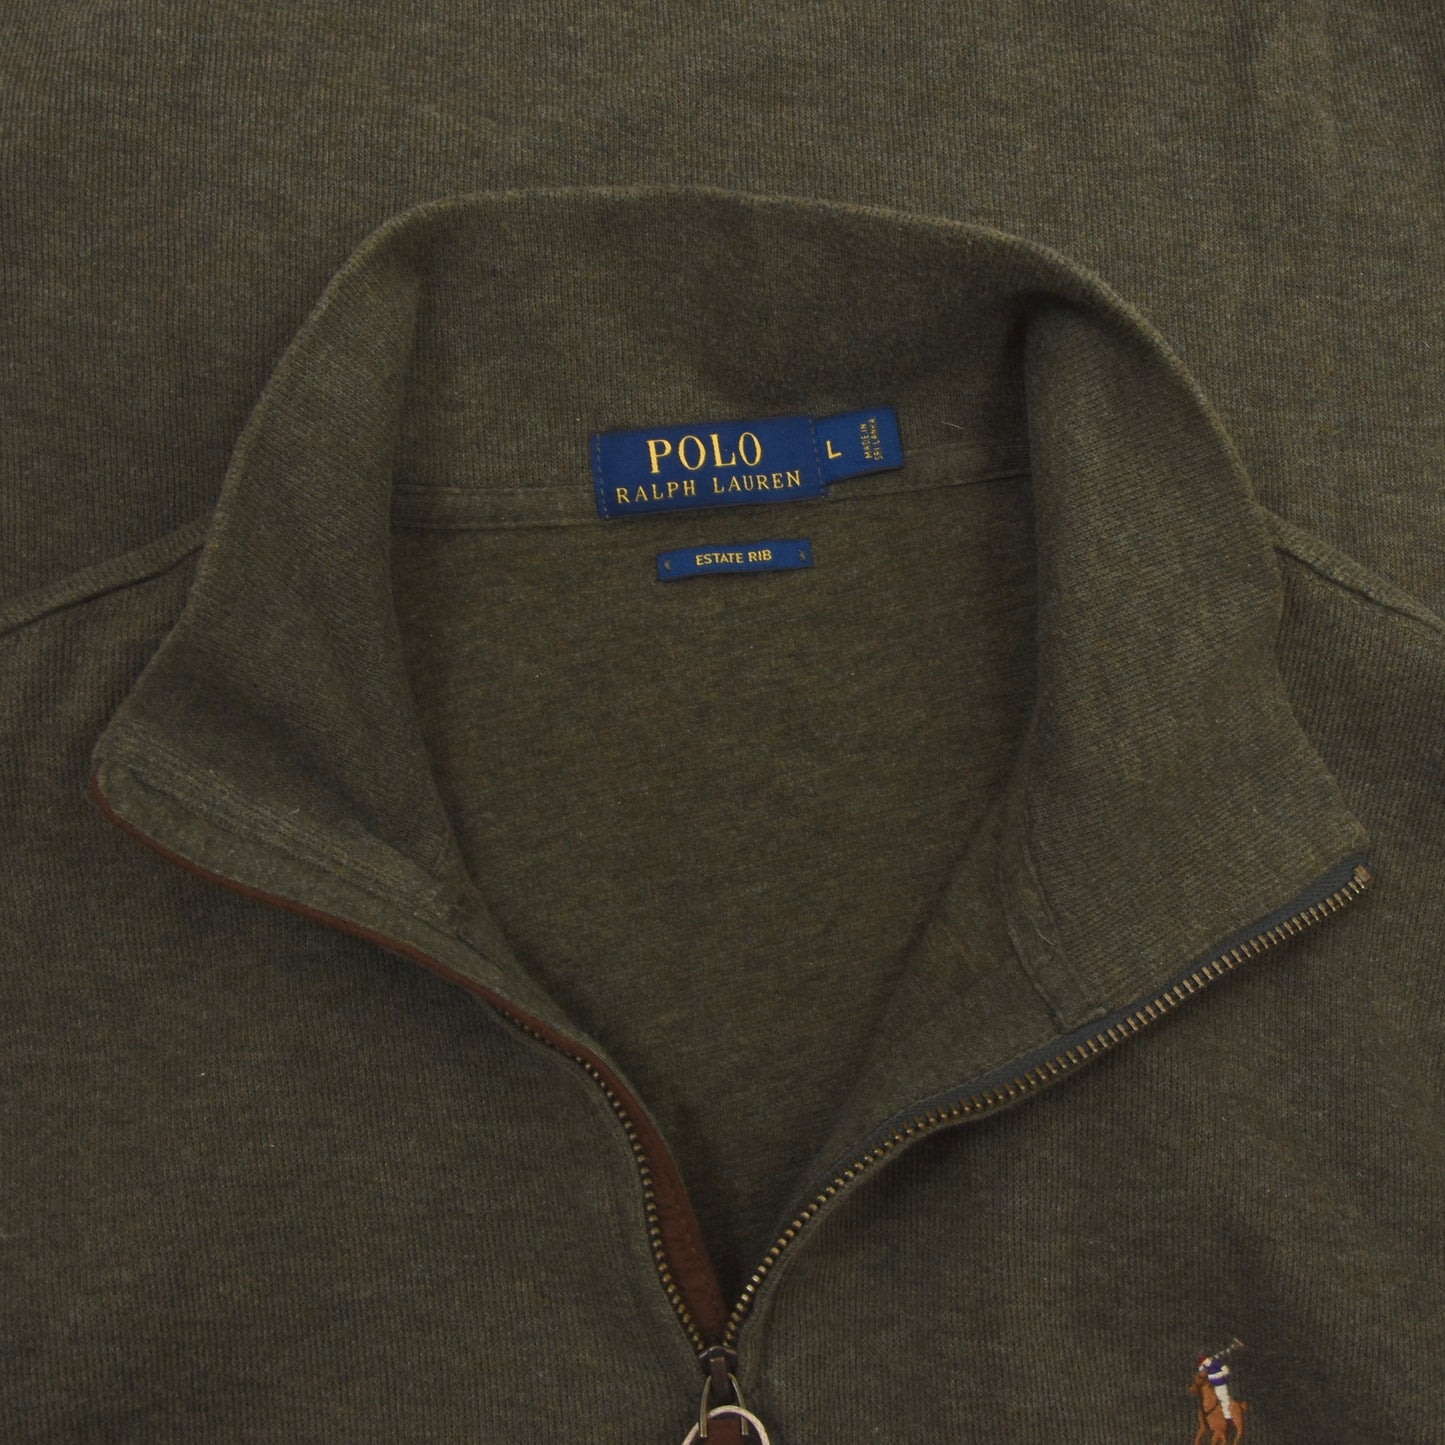 Polo Ralph Lauren 1/4 Zip Estate Rib Sweater - Green